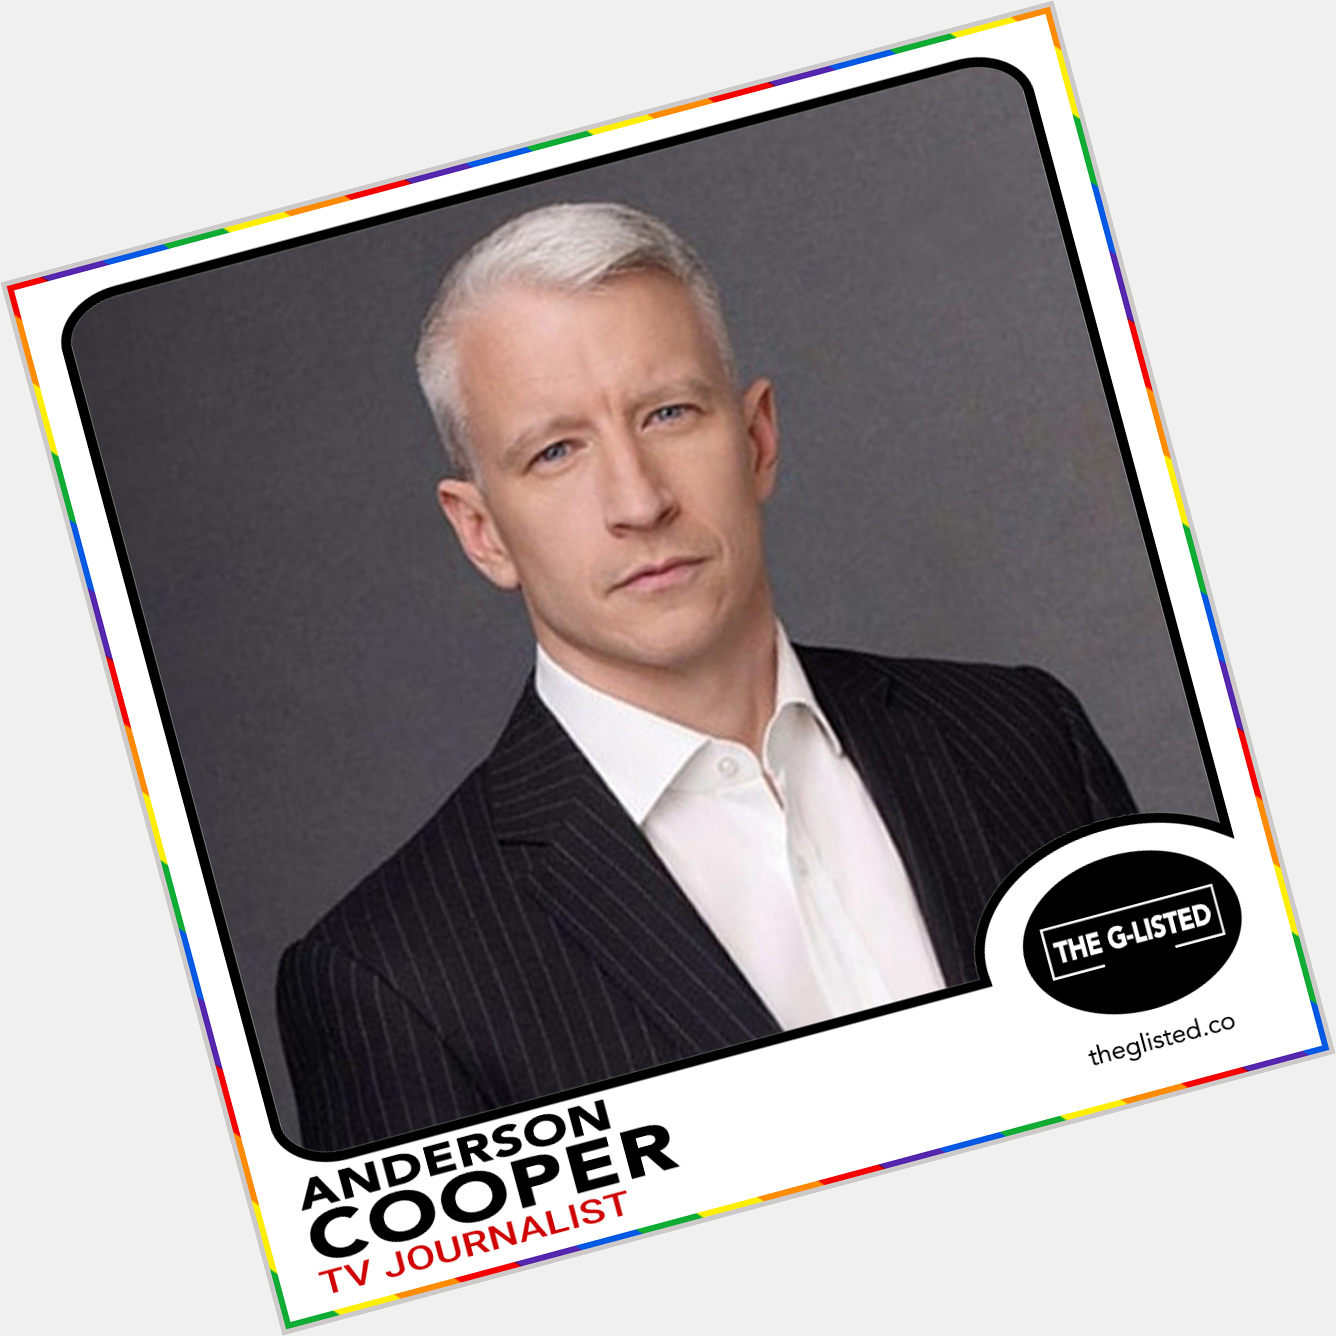 Happy birthday to TV journalist Anderson Cooper!!! 